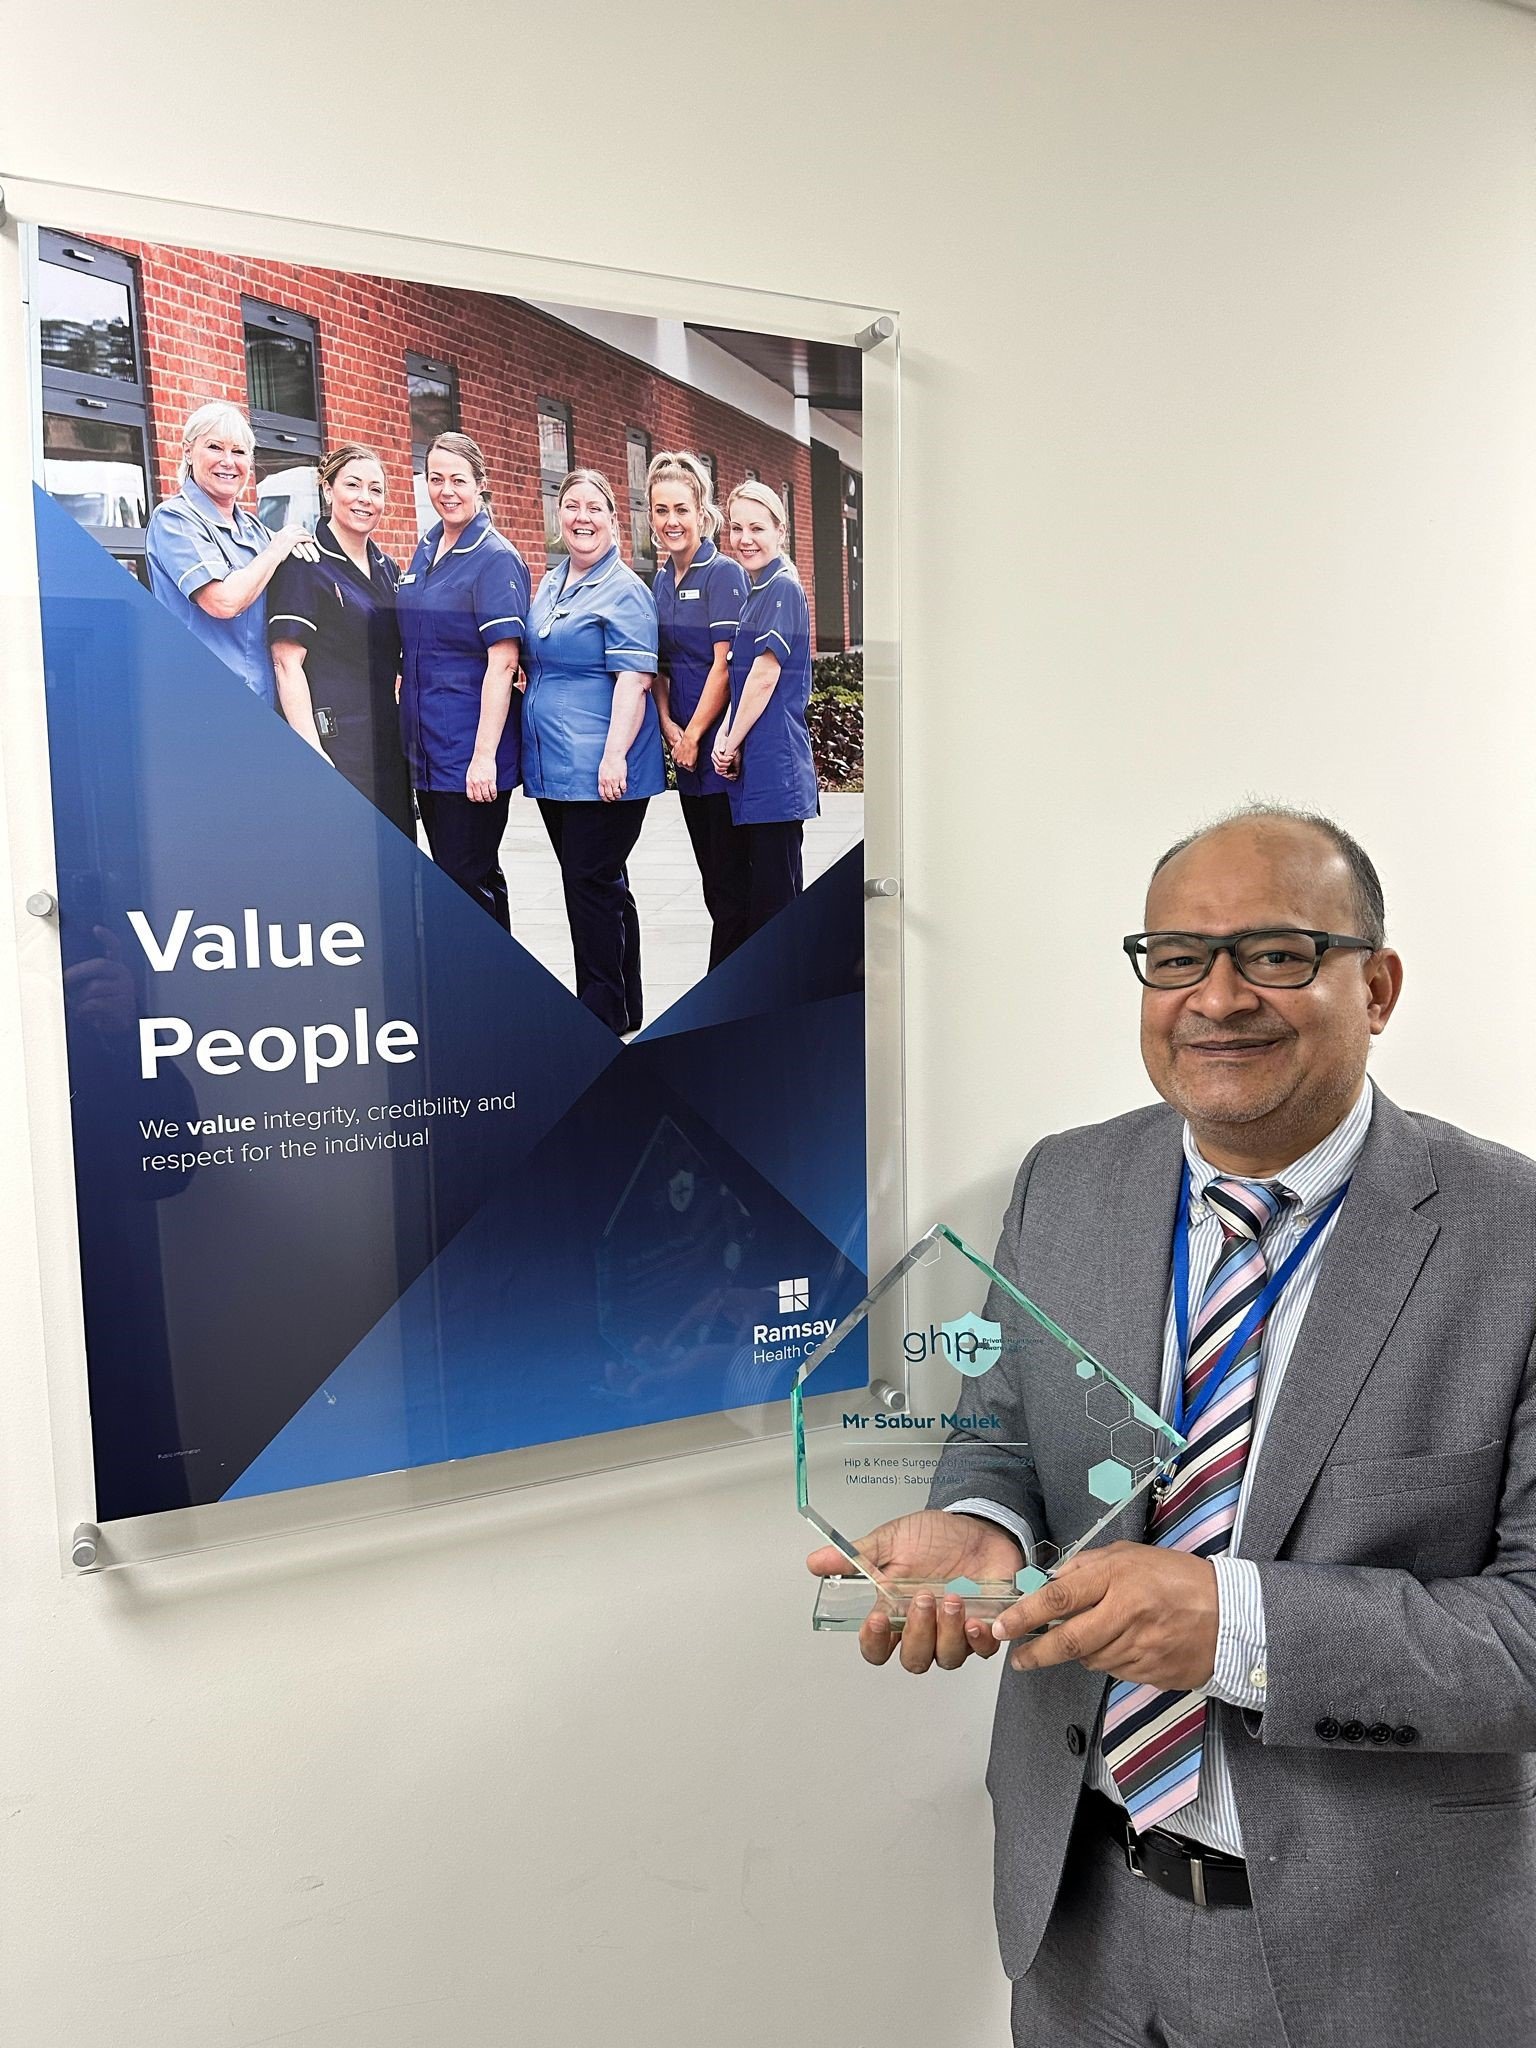 Mr Sabur Malek is Awarded Hip and Knee Surgeon of the Year